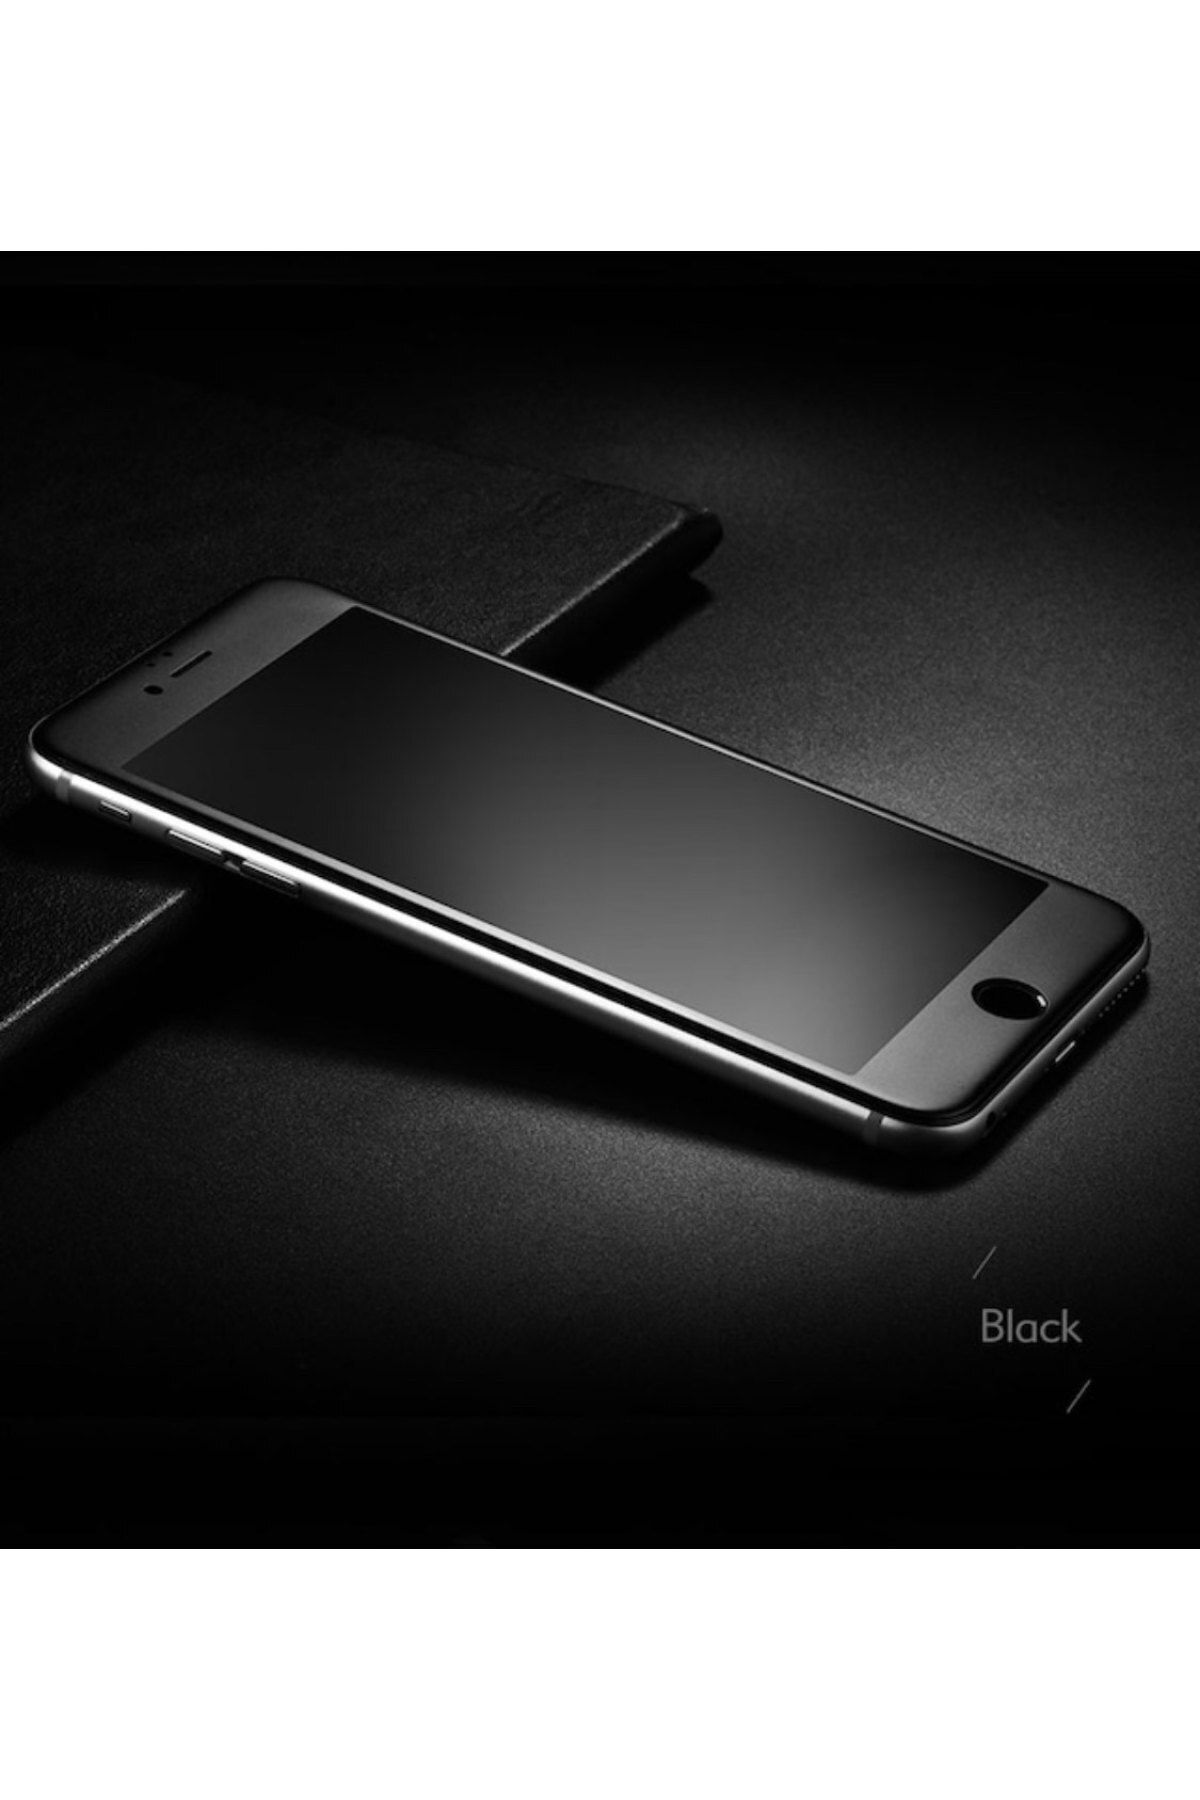 TEKNOPARKTA Iphone 6 Iphone 6s Mat Seramik Nano Tam Kaplayan Full Ekran Koruyucu Siyah